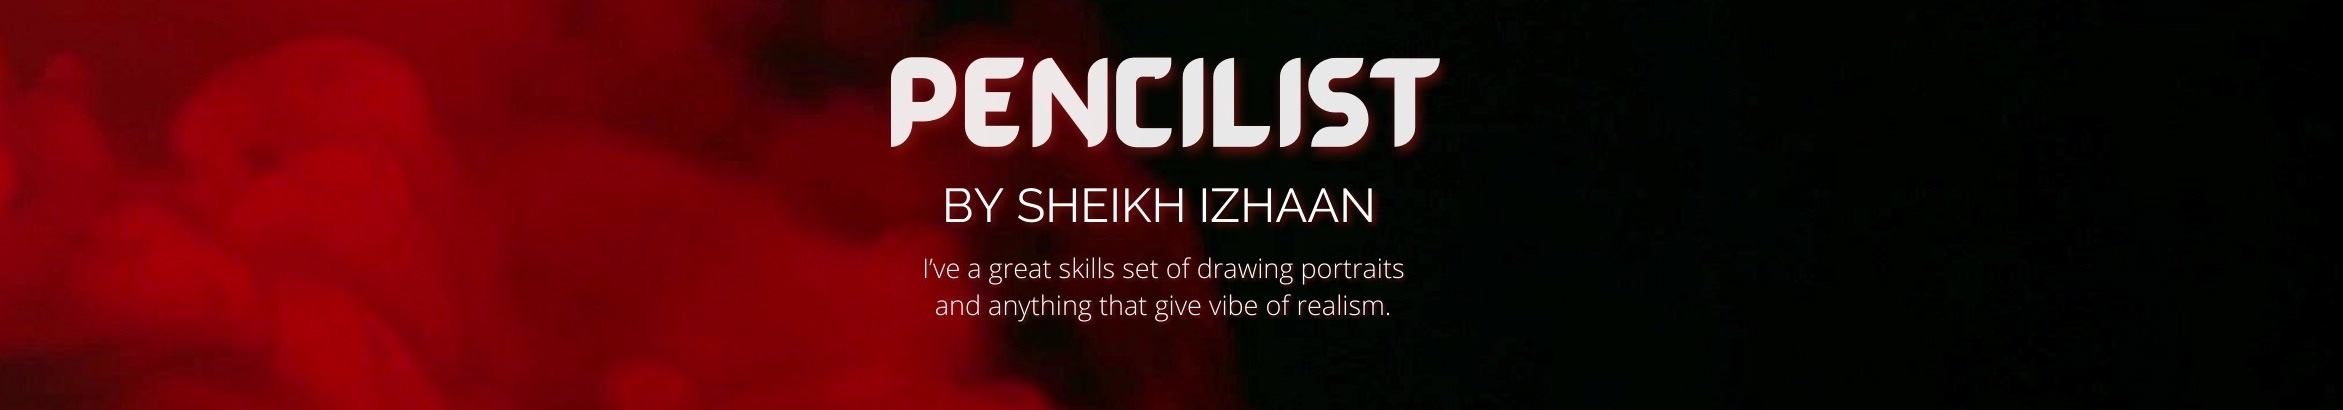 Pencilist .'s profile banner